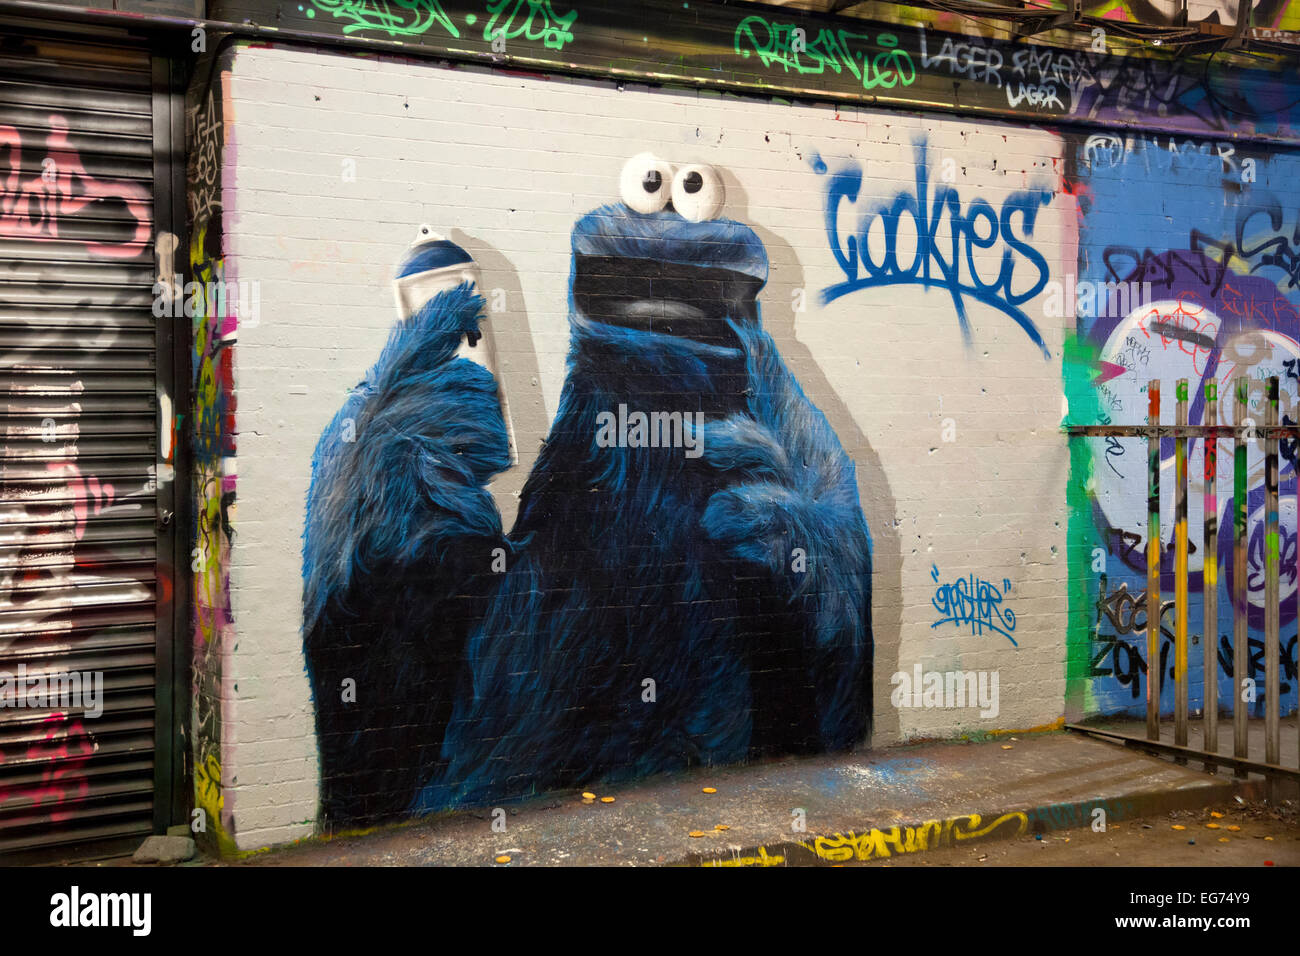 Cookie Monster Graffiti Leake Street, also known as Graffiti Tunnel underneath Waterloo Train Station, Lambeth, London, UK. Stock Photo